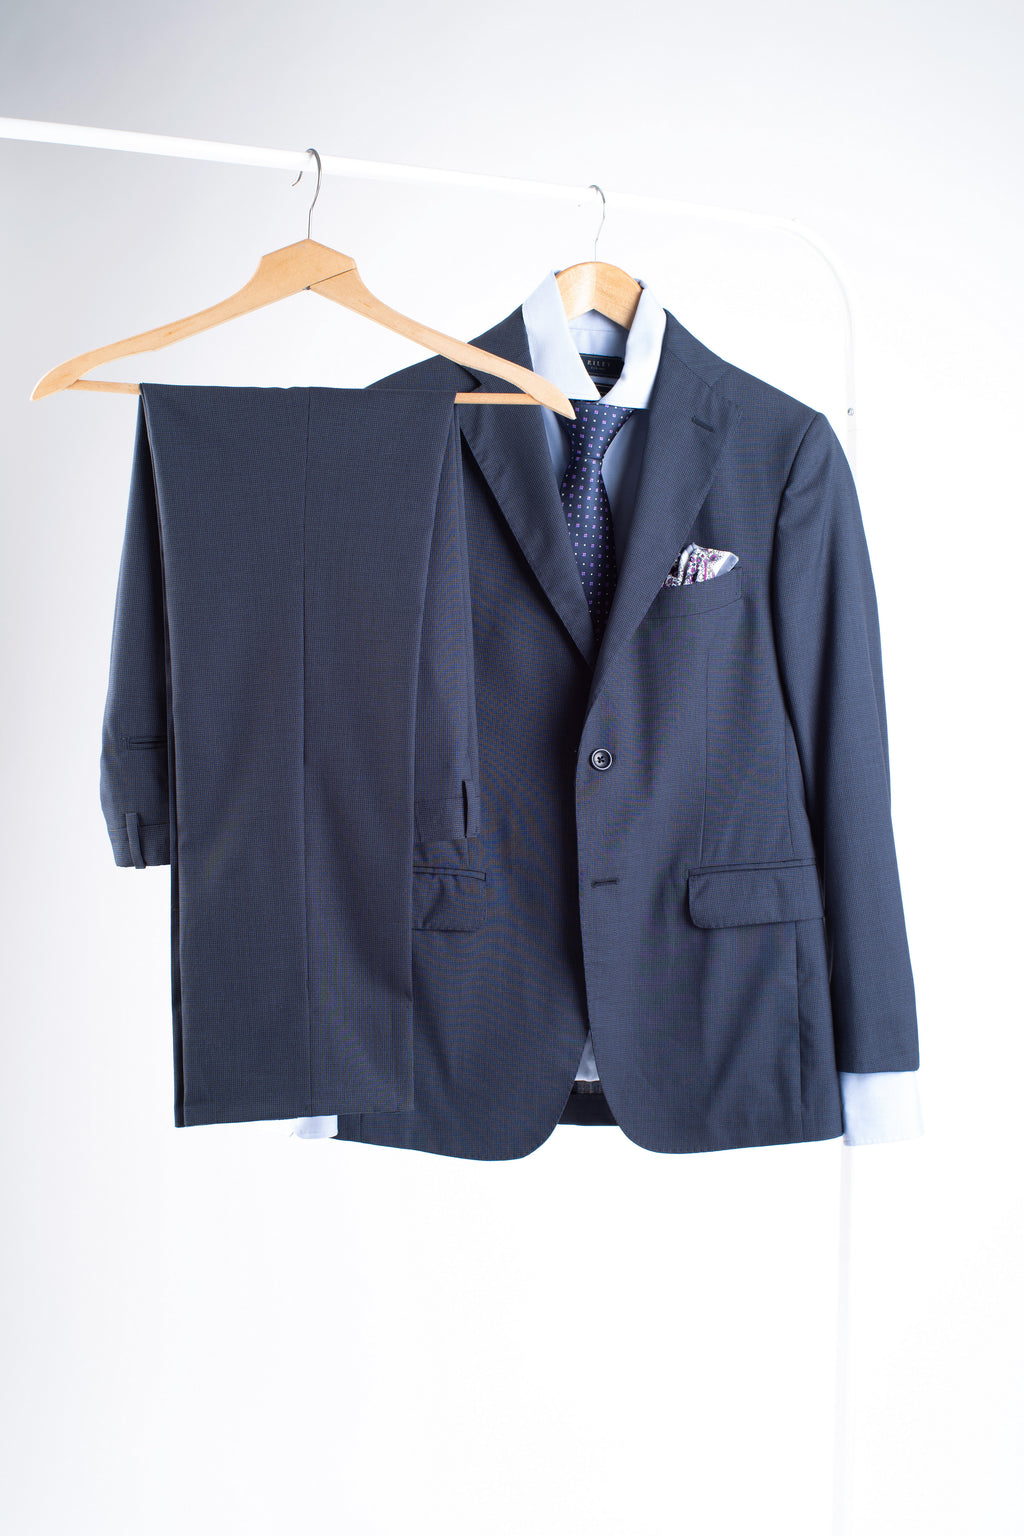 Boggi Summer Lightweight Blue 2 Pieces Suit, US 34R, EU 44R